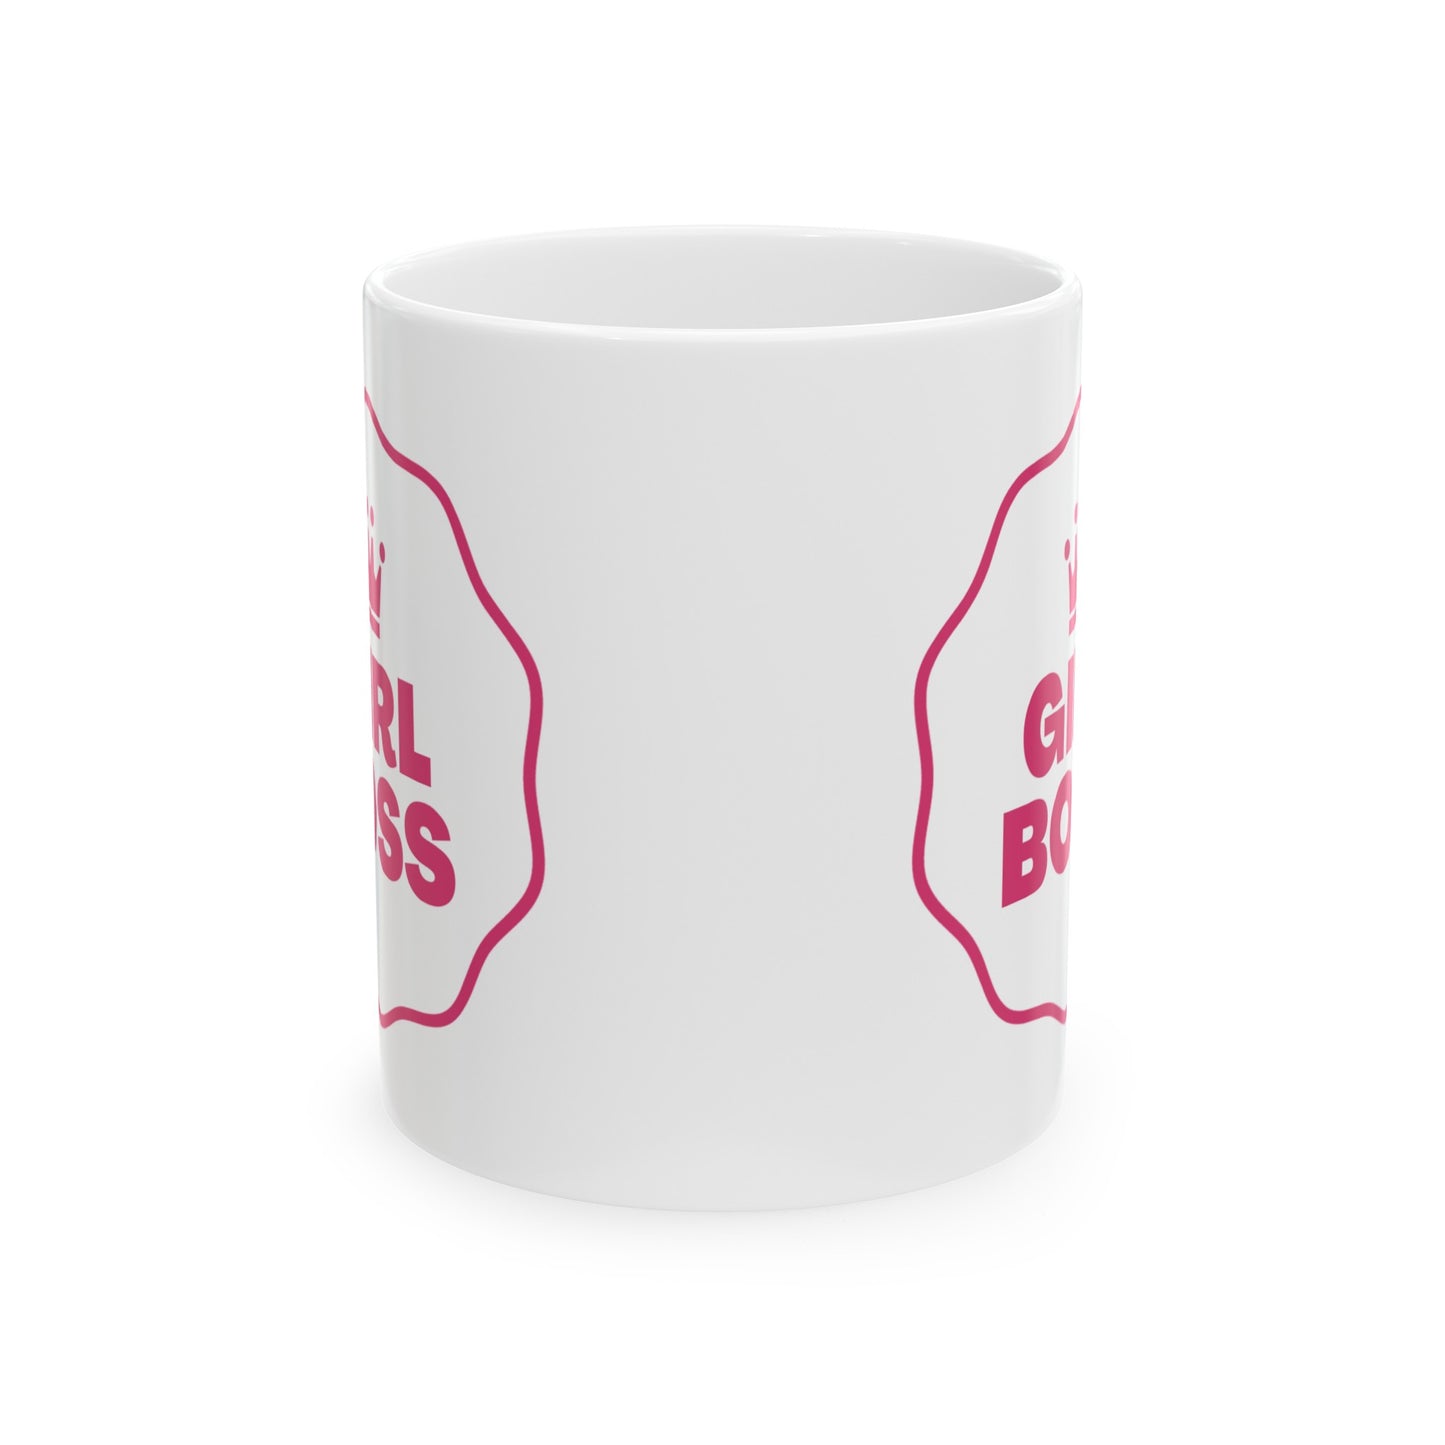 Girl Boss - Ceramic Mug 11oz